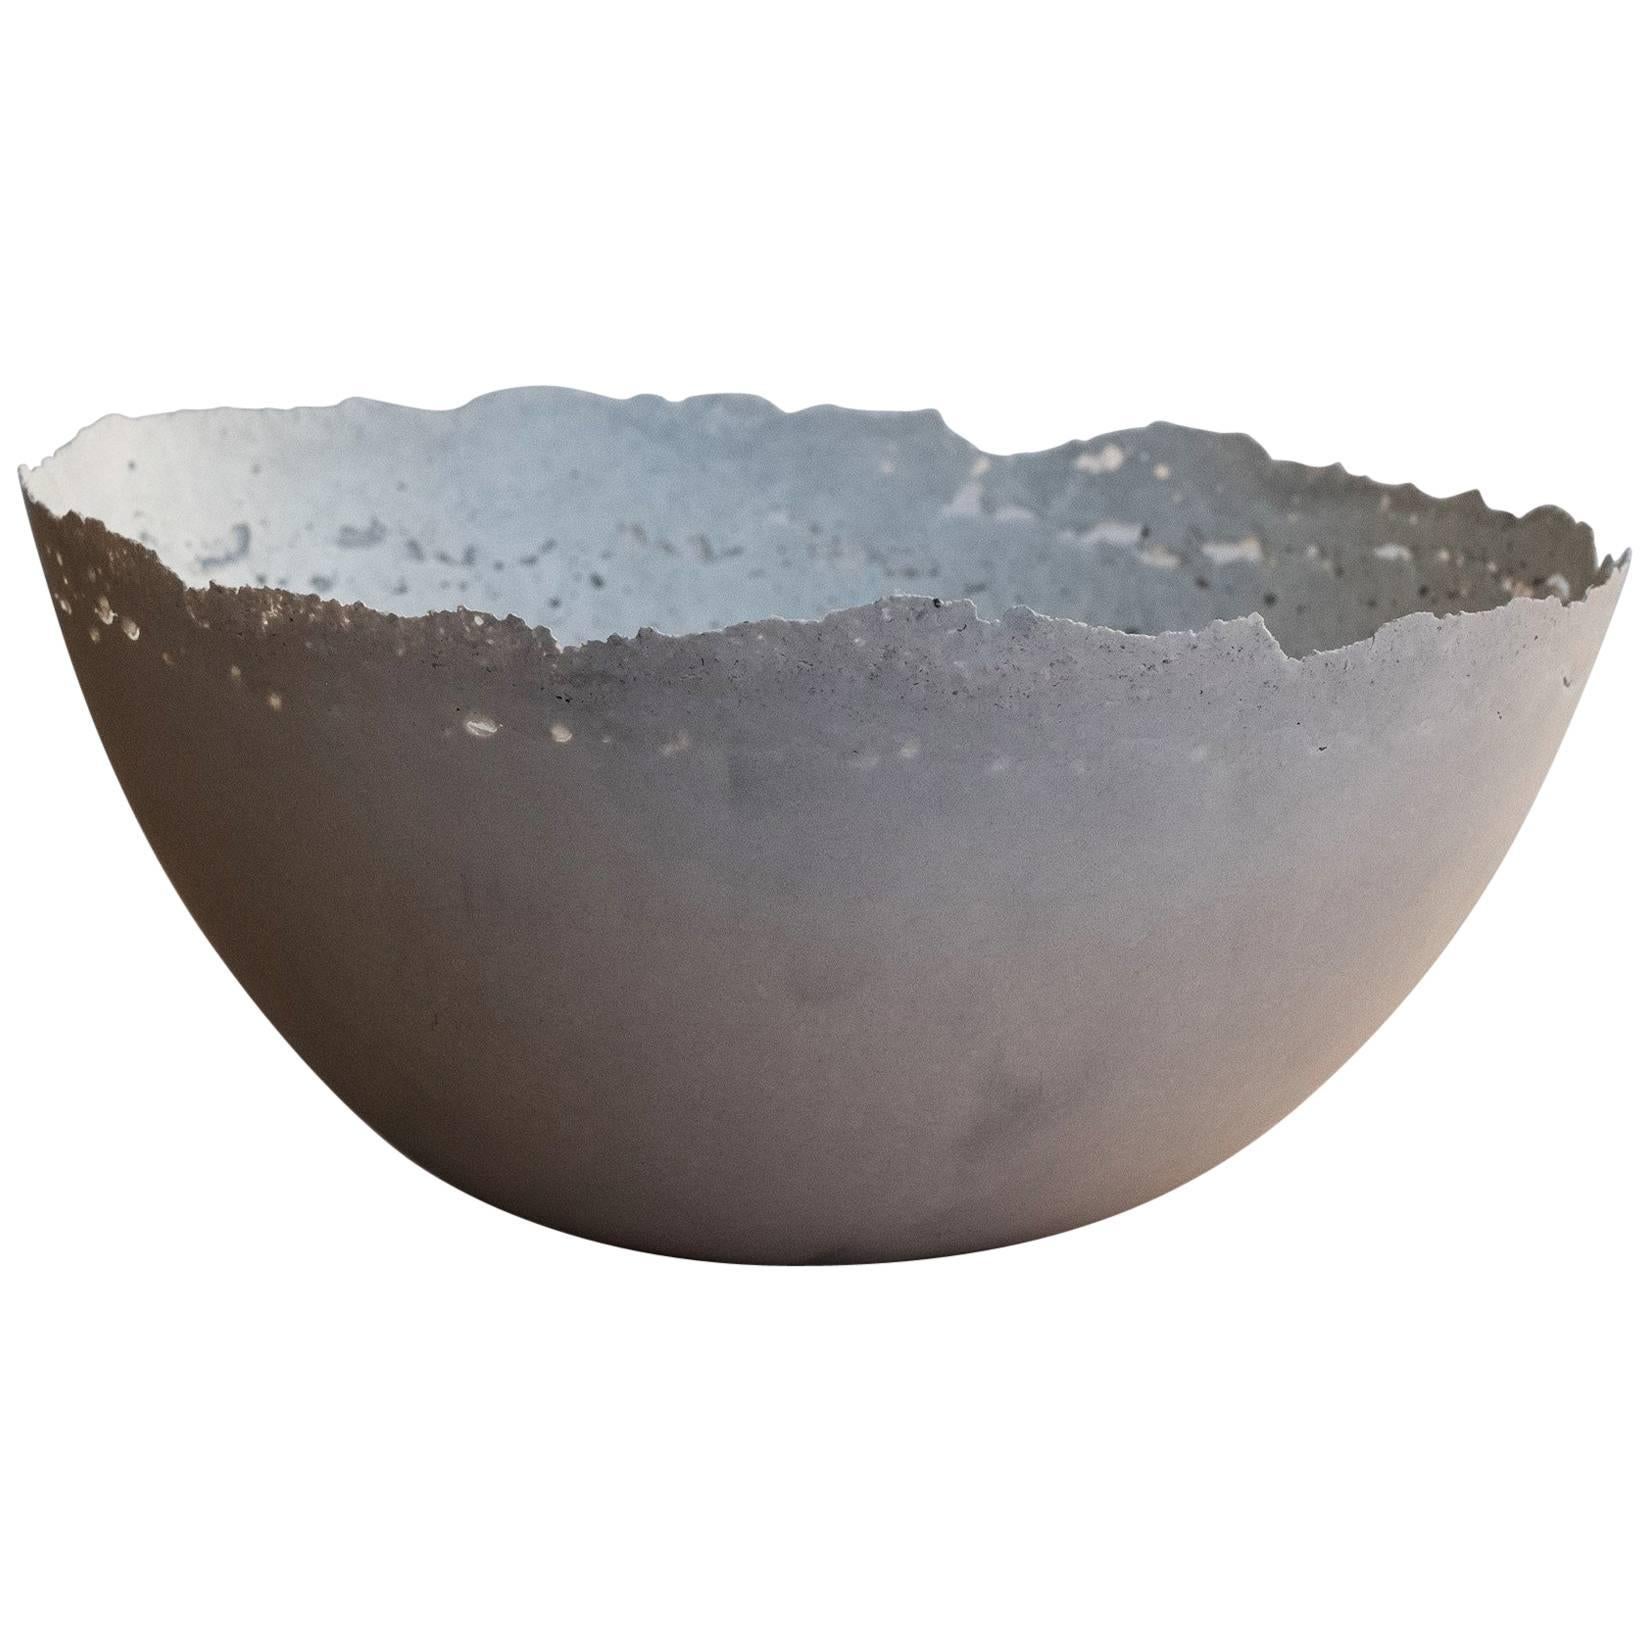 Handmade Cast Concrete Bowl in White by UMÉ Studio